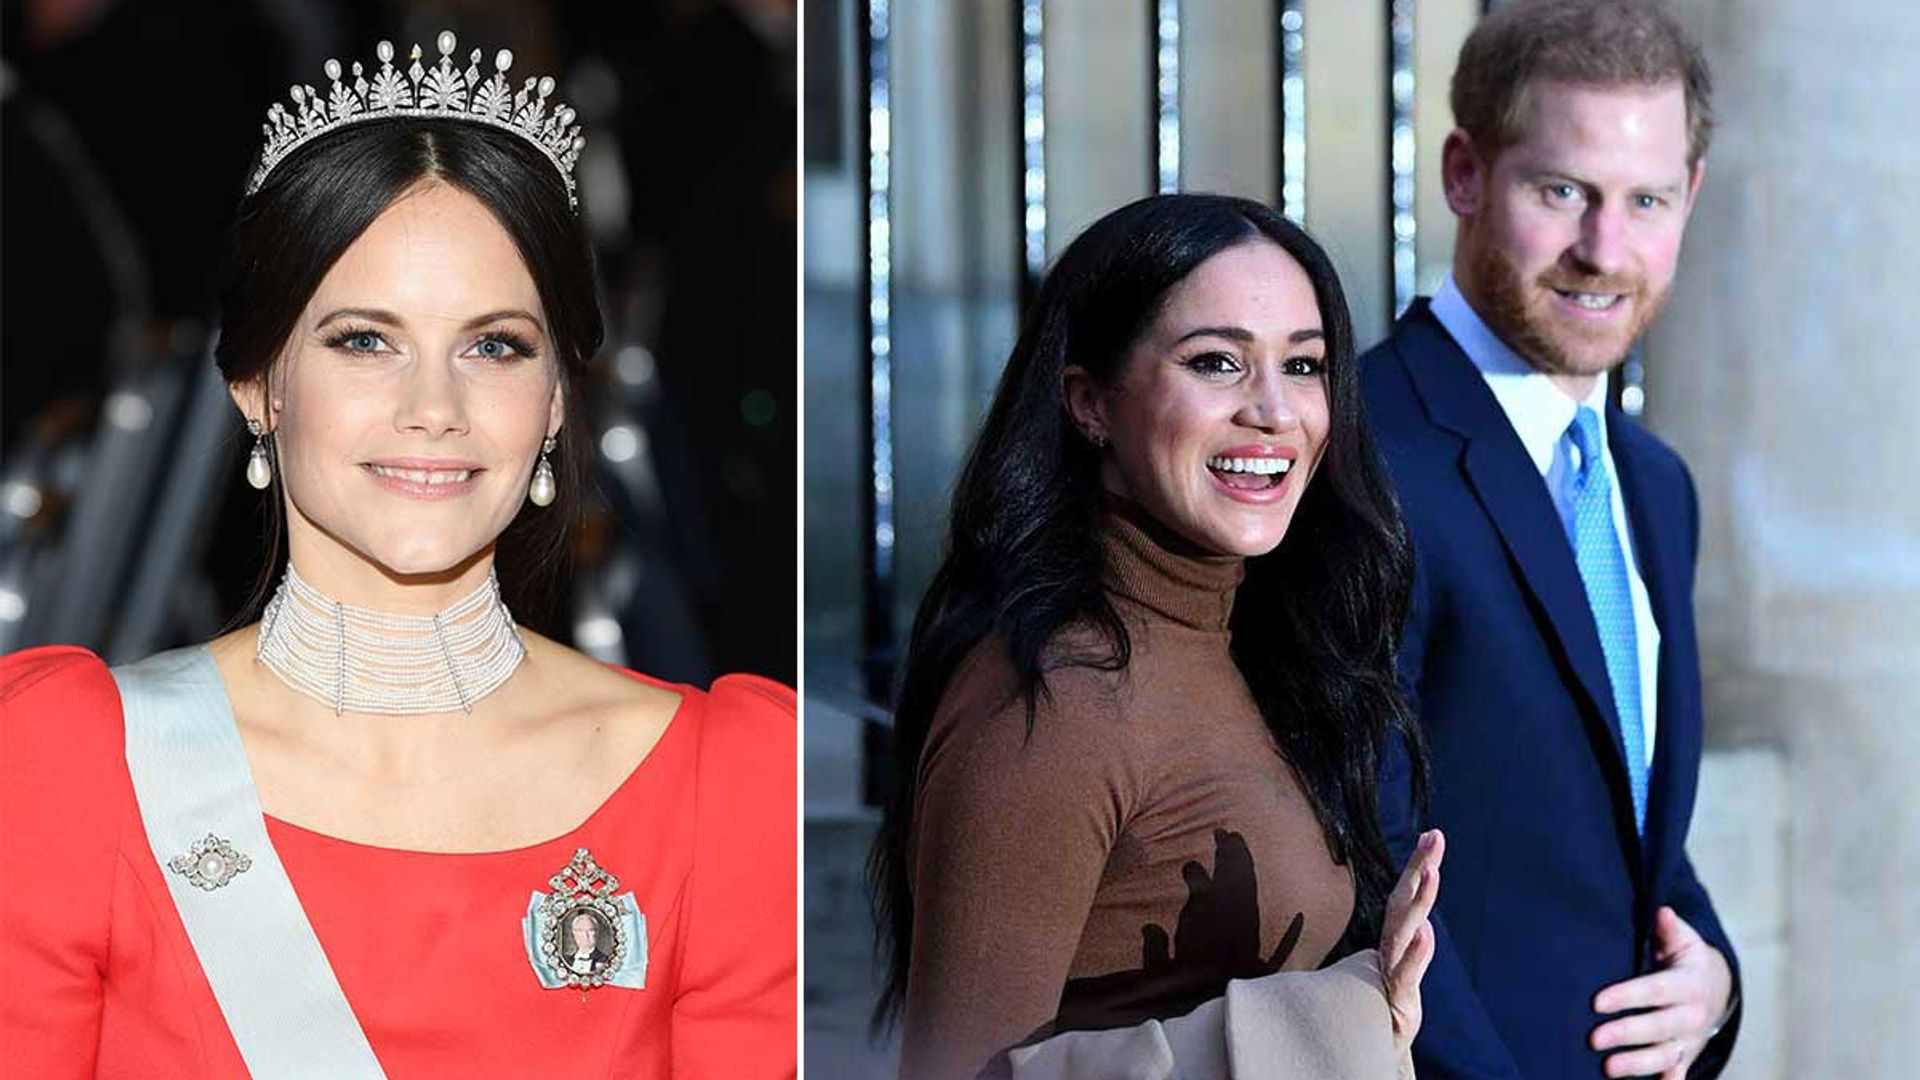 Princess Sofia opens up on Prince Harry and Meghan Markle after royal wedding